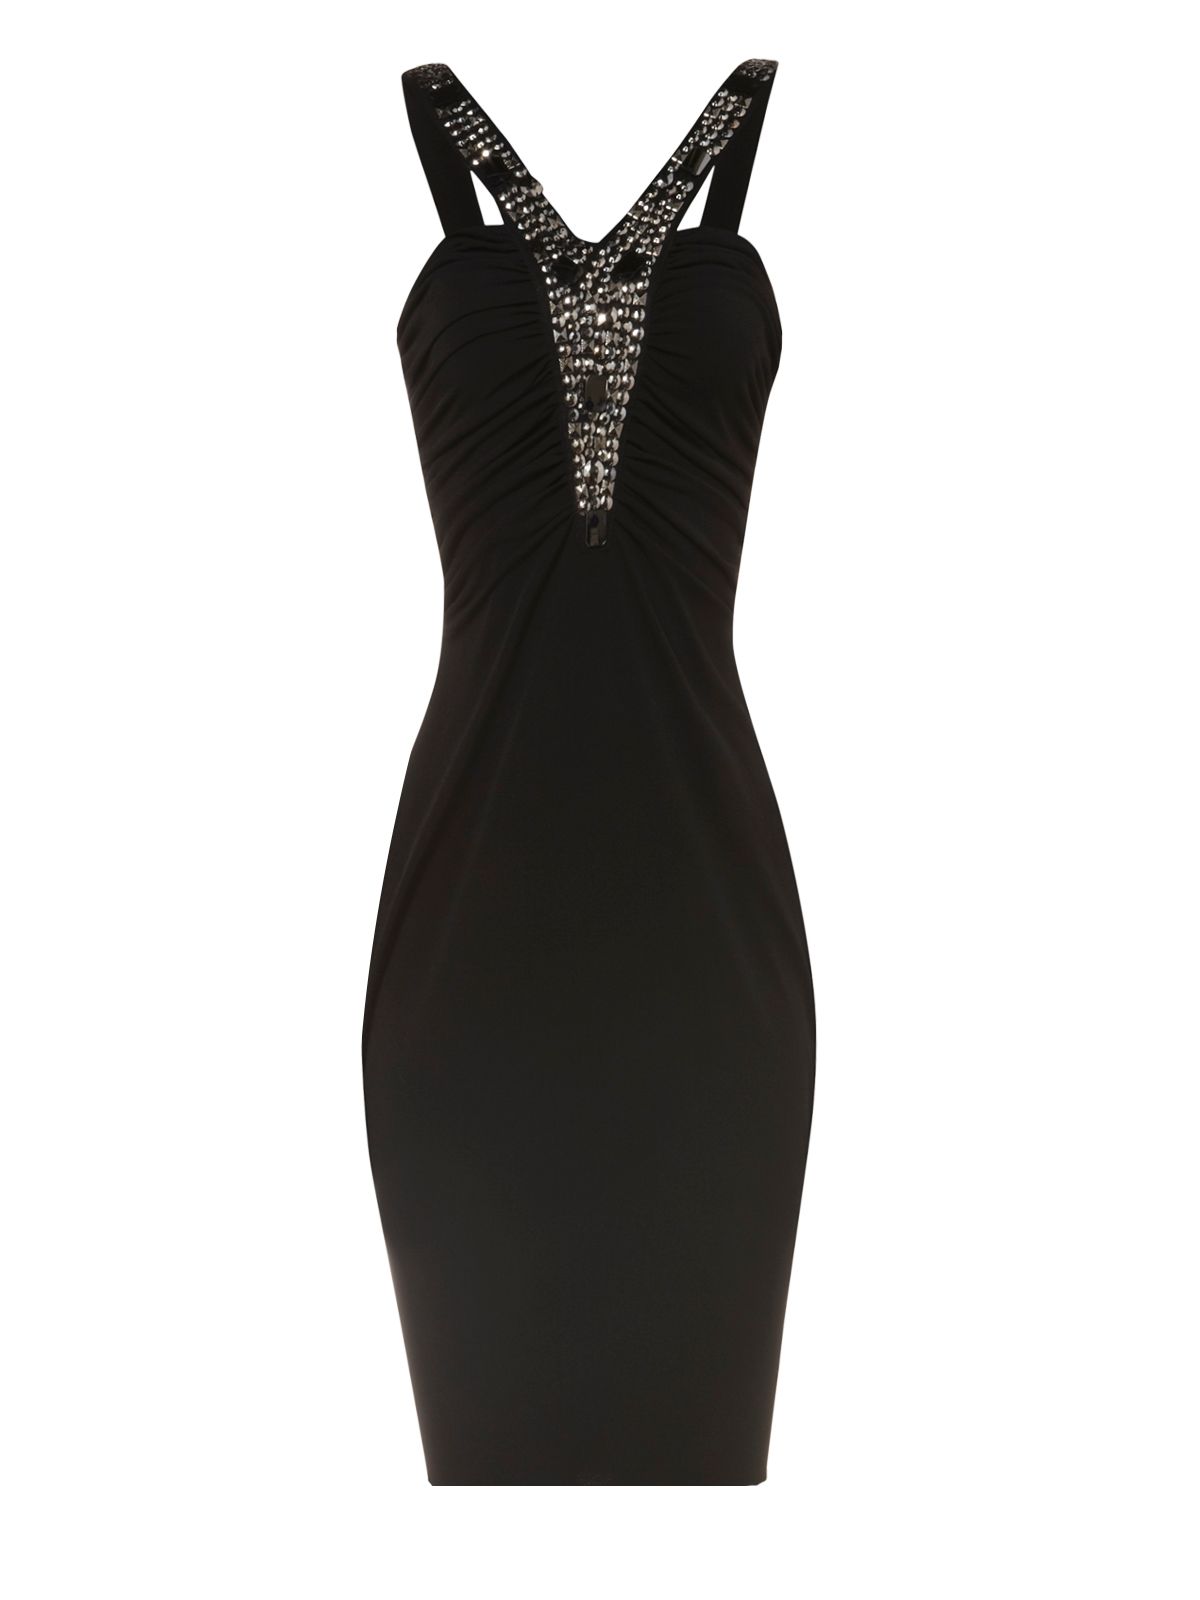 Jane Norman Mirrored Short Dress in Black | Lyst